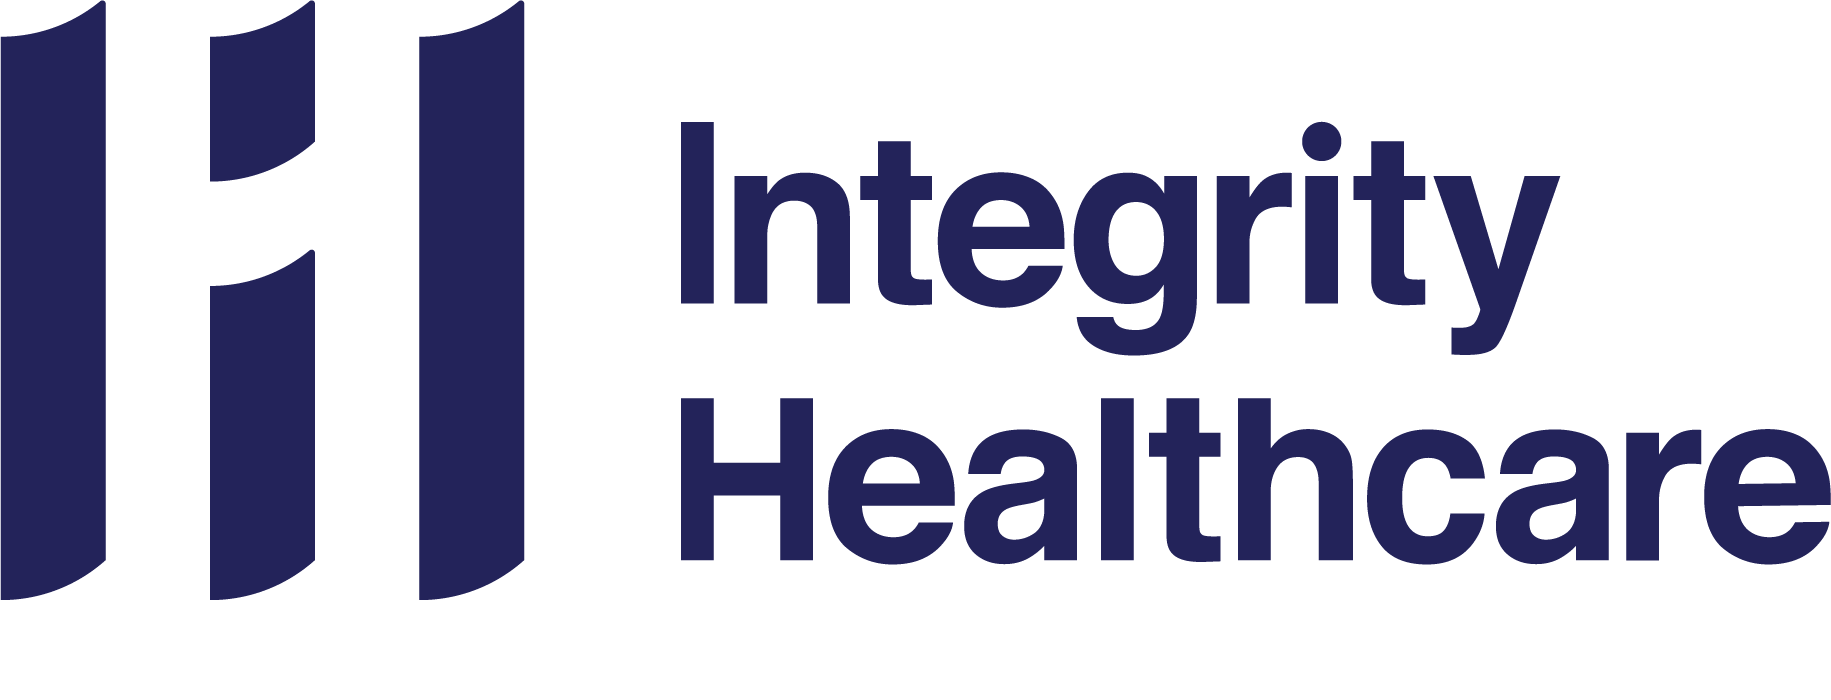 Integrity Healthcare Co., Ltd. corporate logo